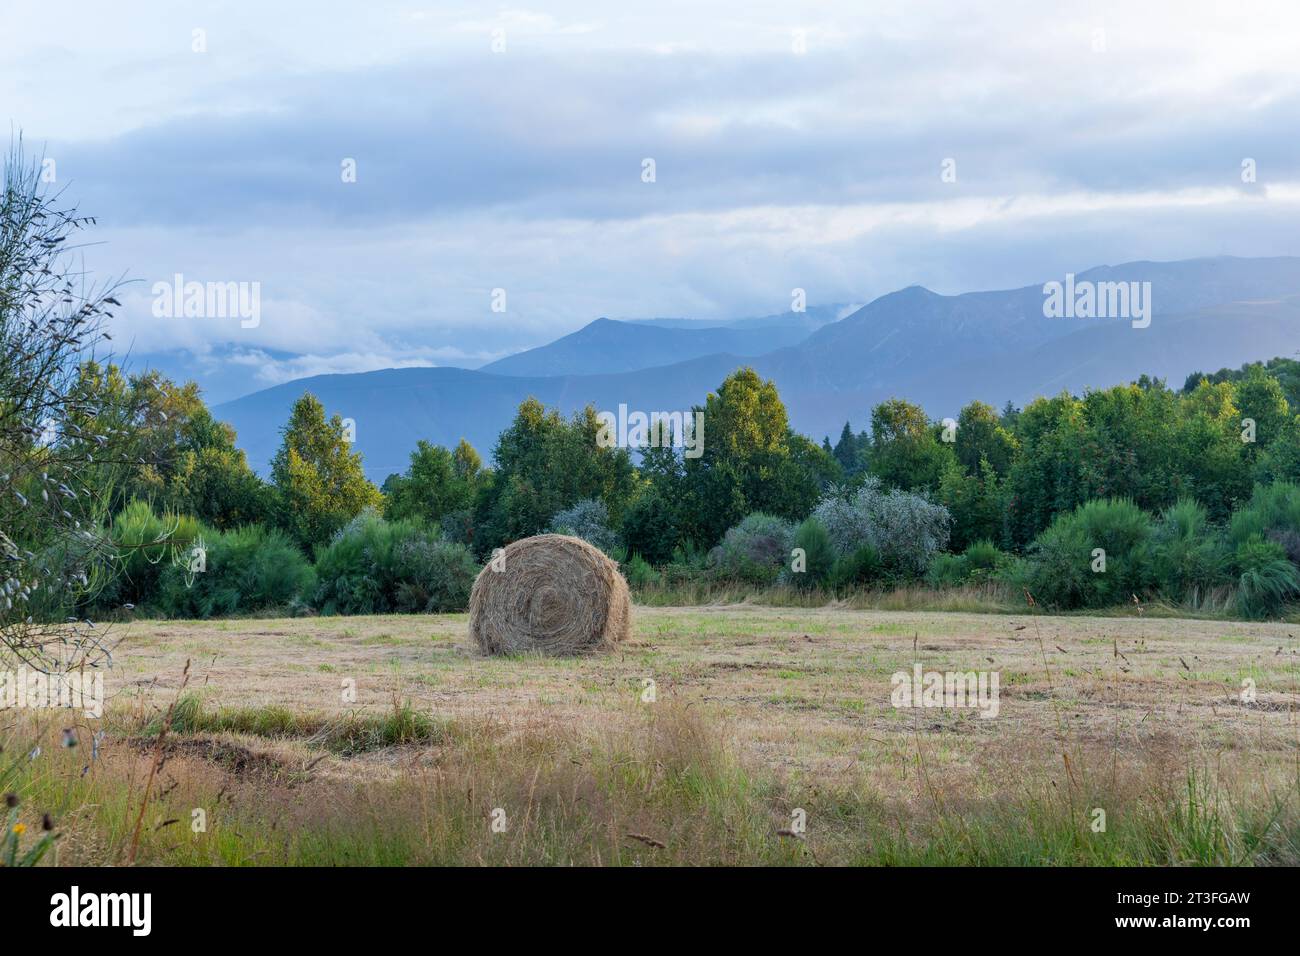 Landscape along the Camino de Santiago trail between Grandas de Salime and Fonsagrada, Asturias, Spain Stock Photo